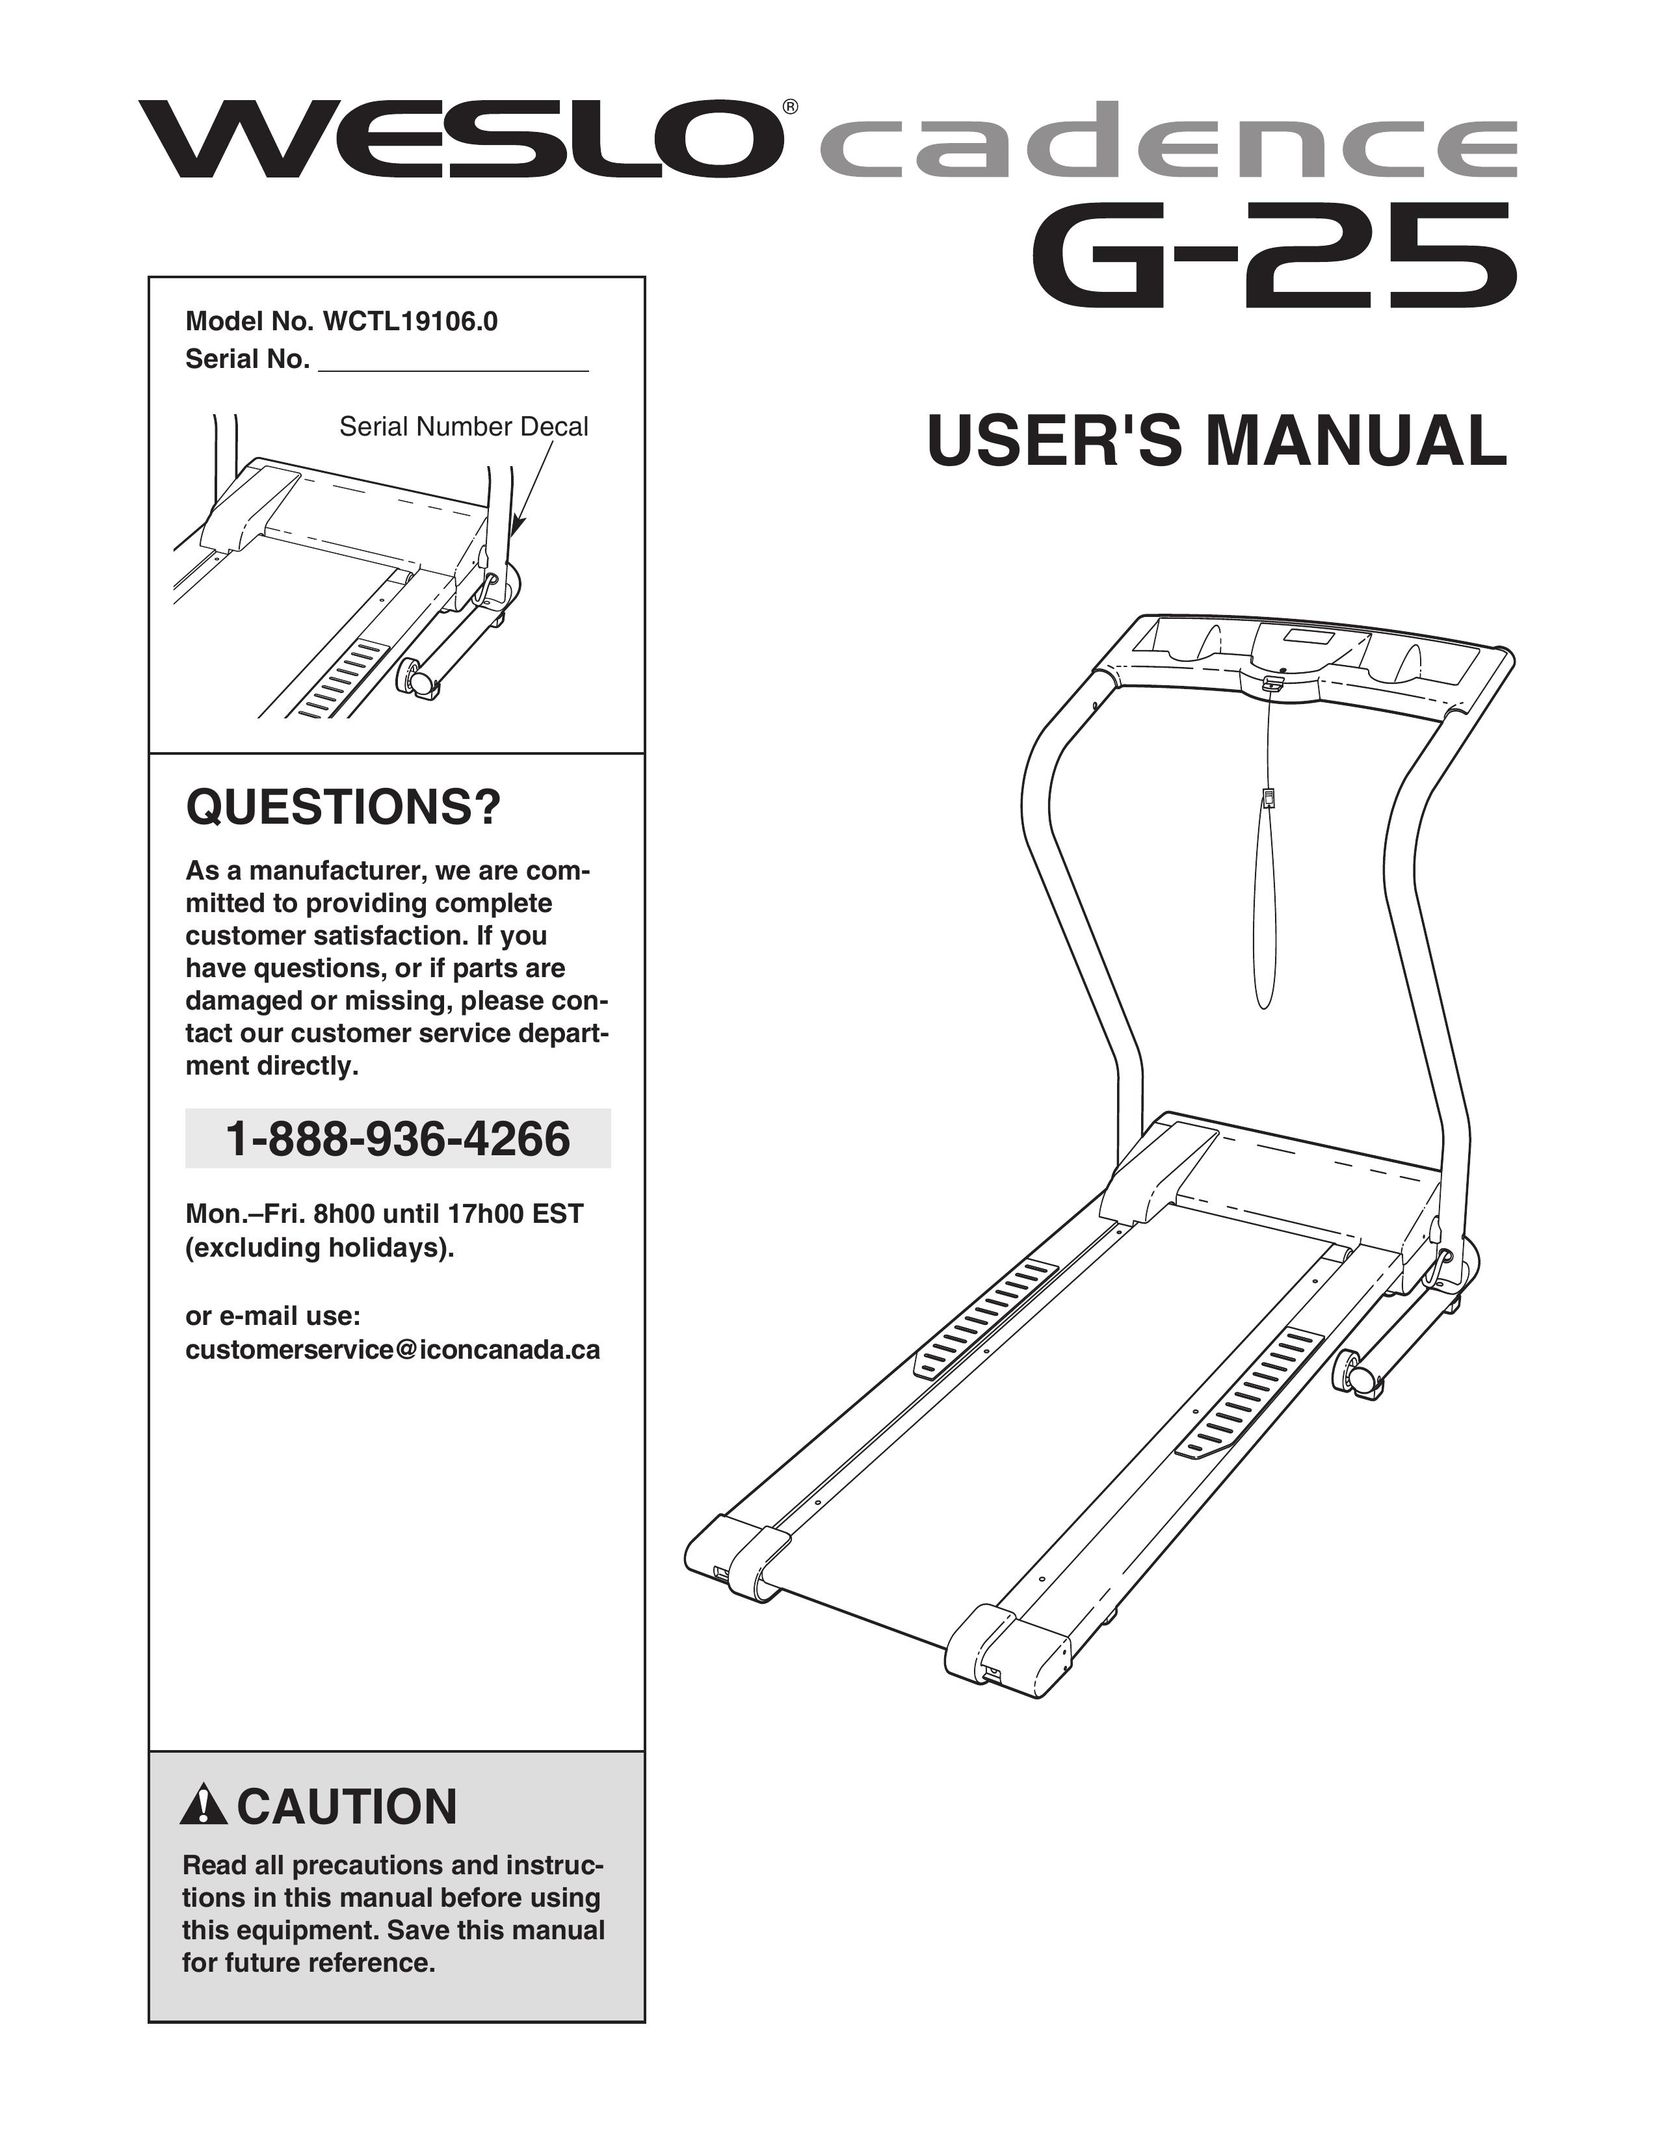 Weslo wctl19106.0 Treadmill User Manual